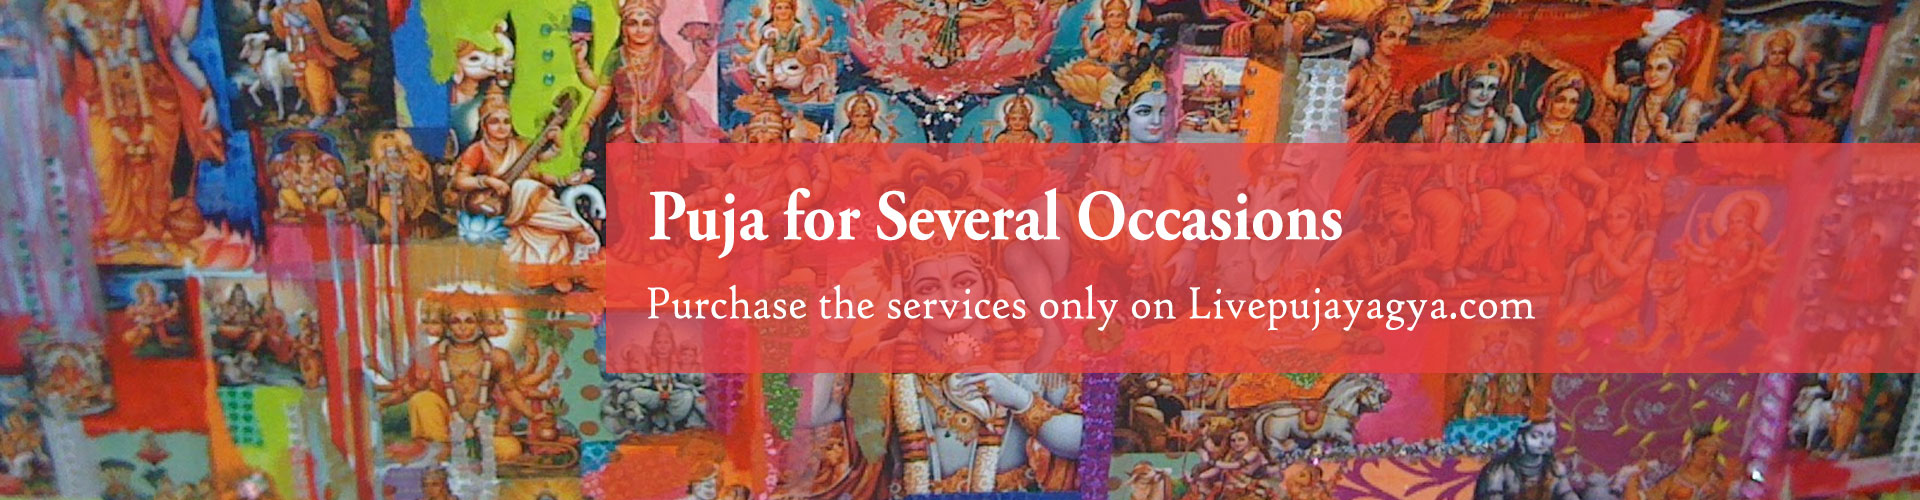 Online Puja and Yagya Services with Live Telecast | livepujayagya.com